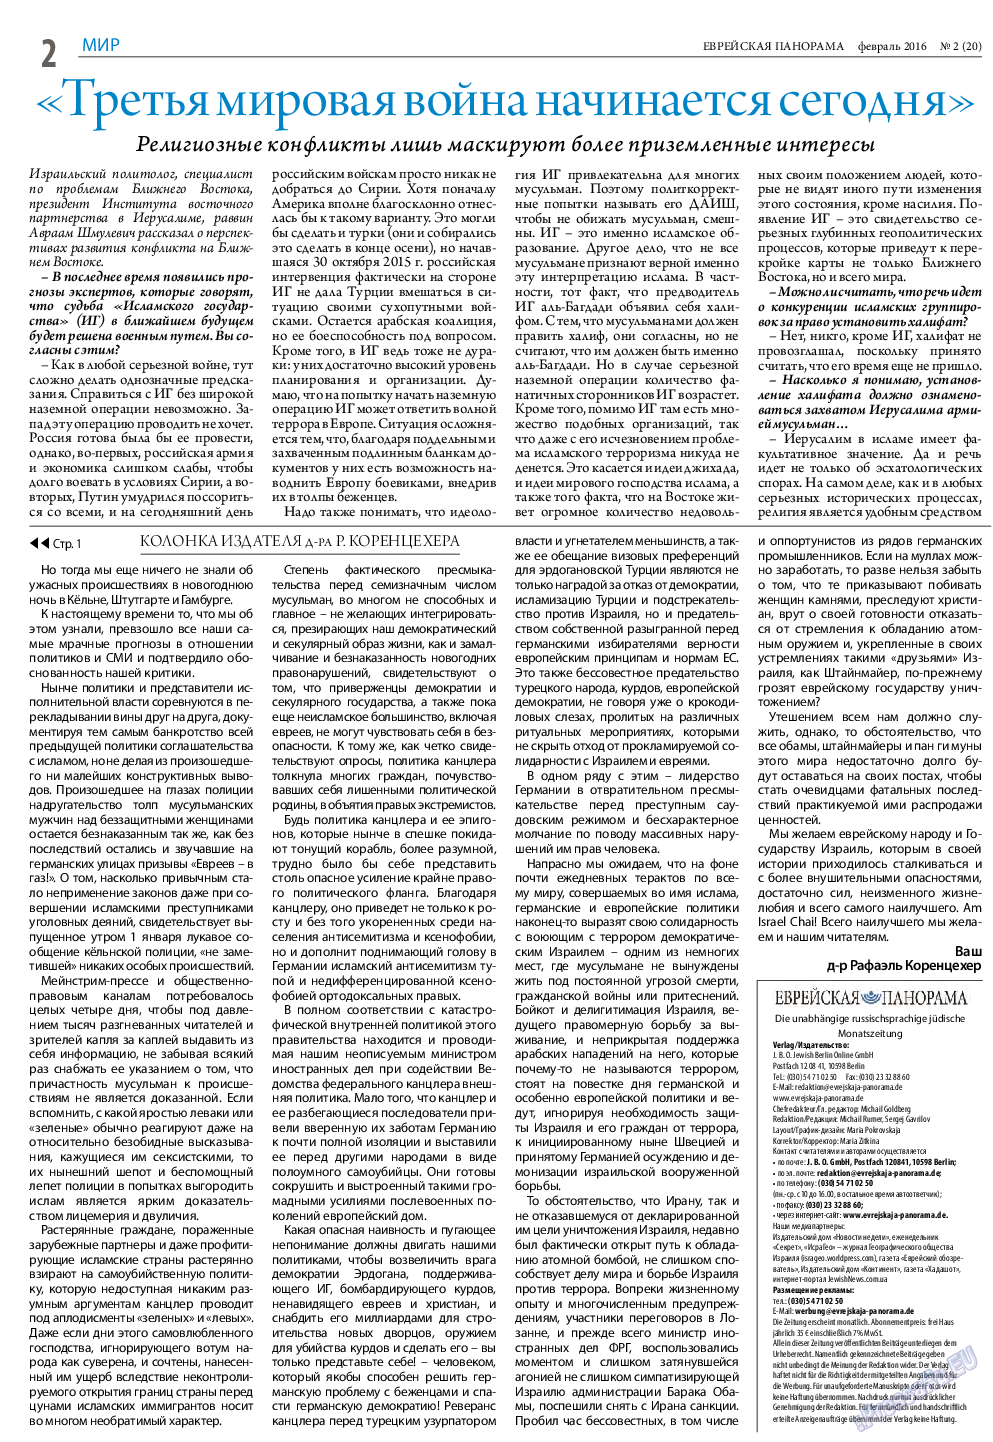 Еврейская панорама, газета. 2016 №2 стр.2